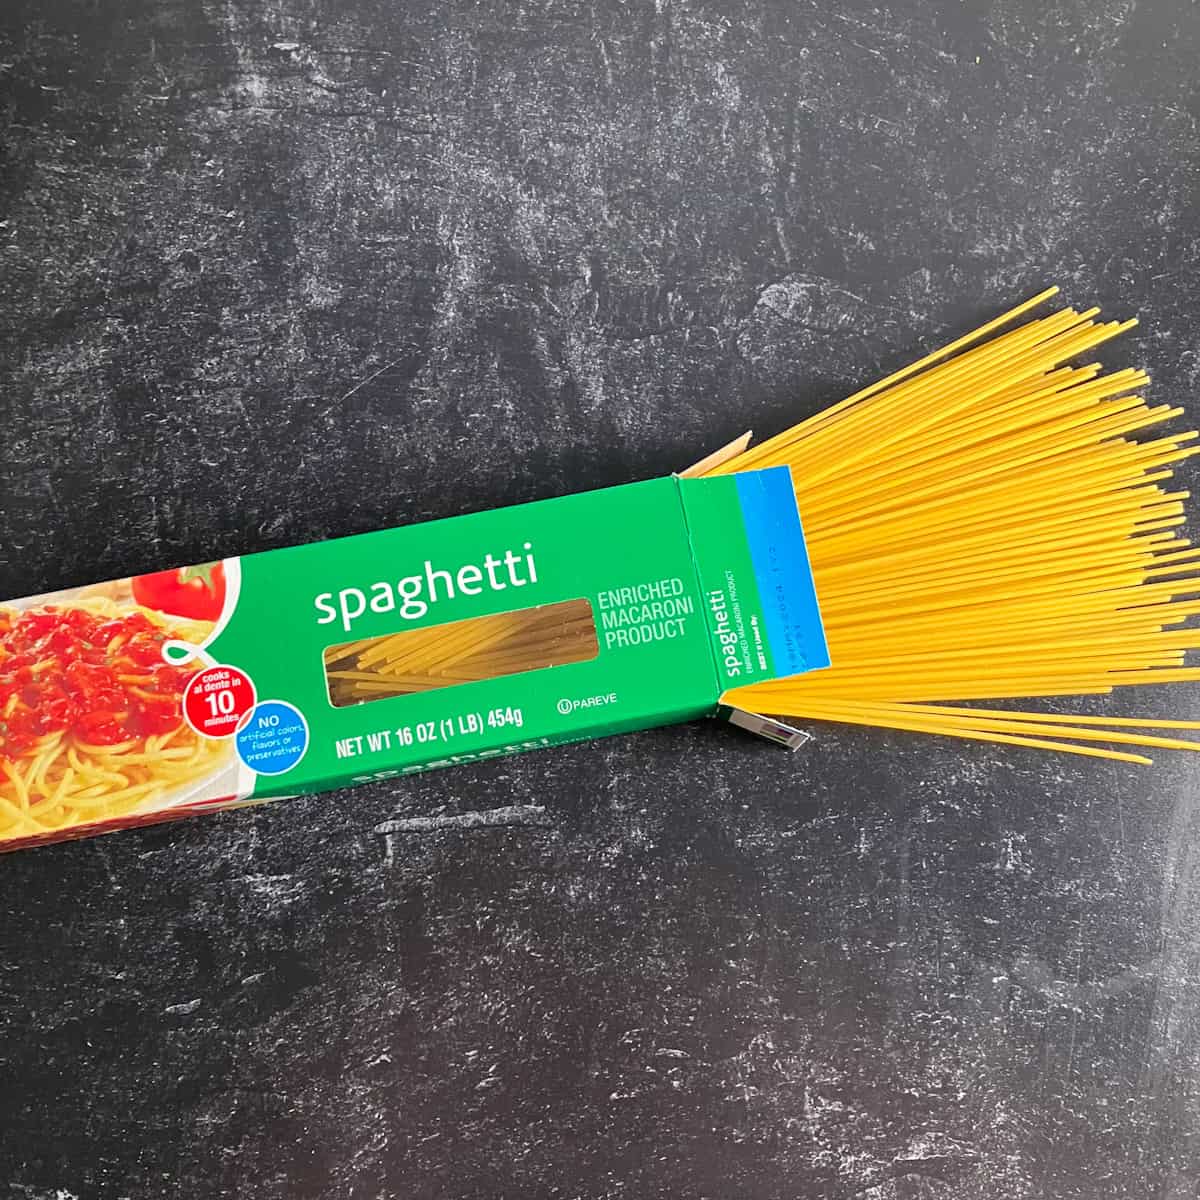 cook spaghetti how long